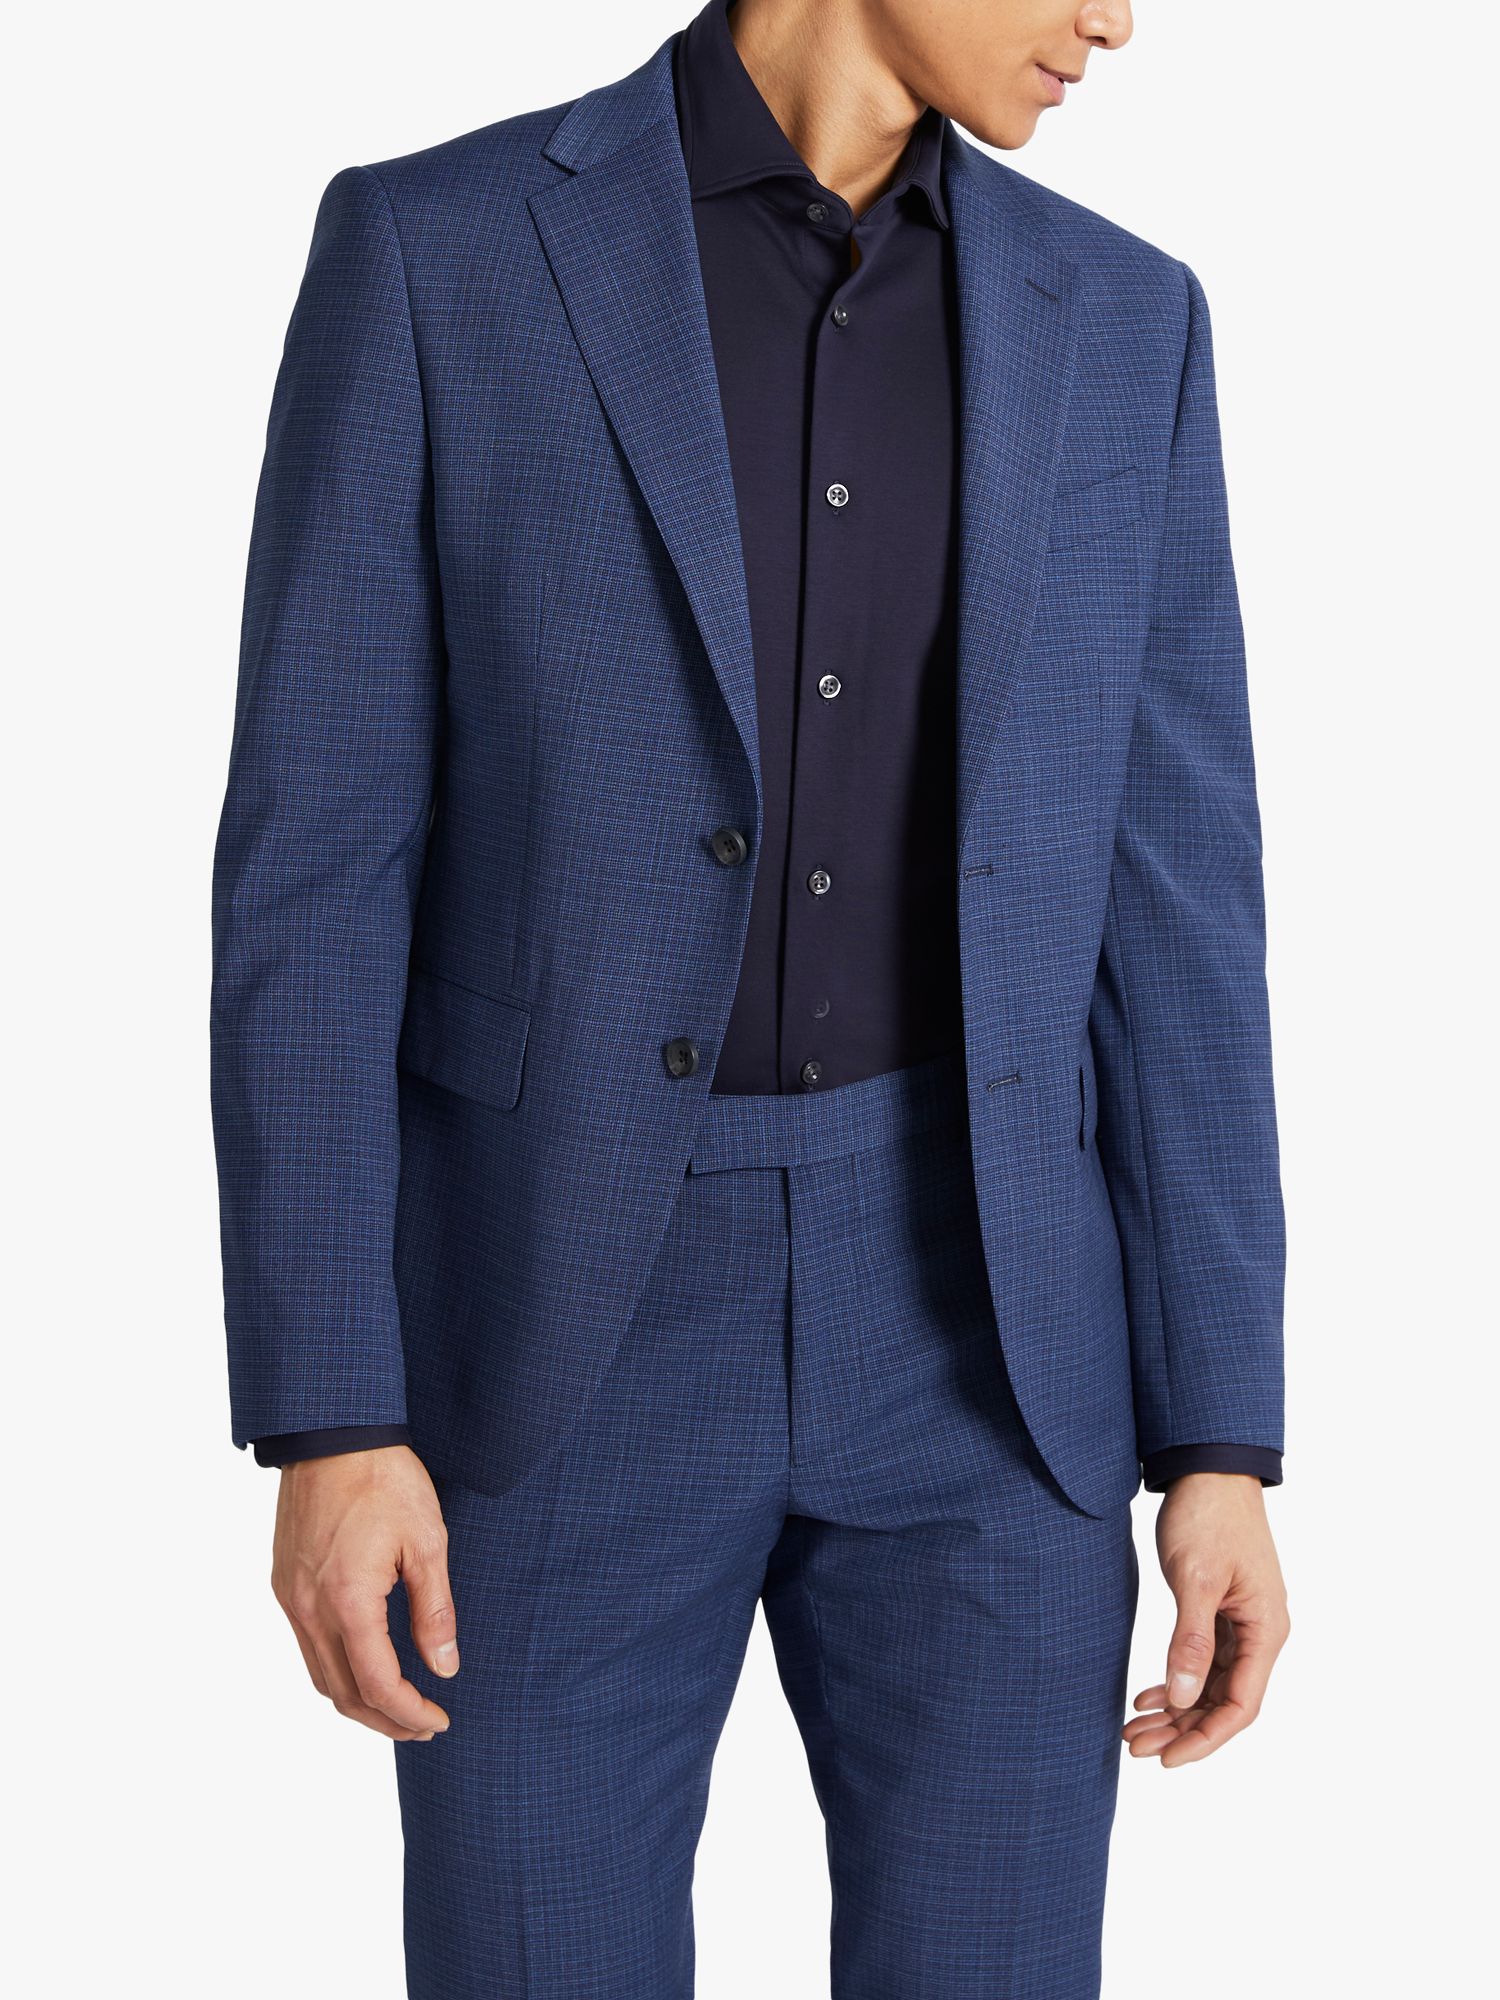 DKNY Slim Fit Check Suit Jacket, Blue at John Lewis & Partners